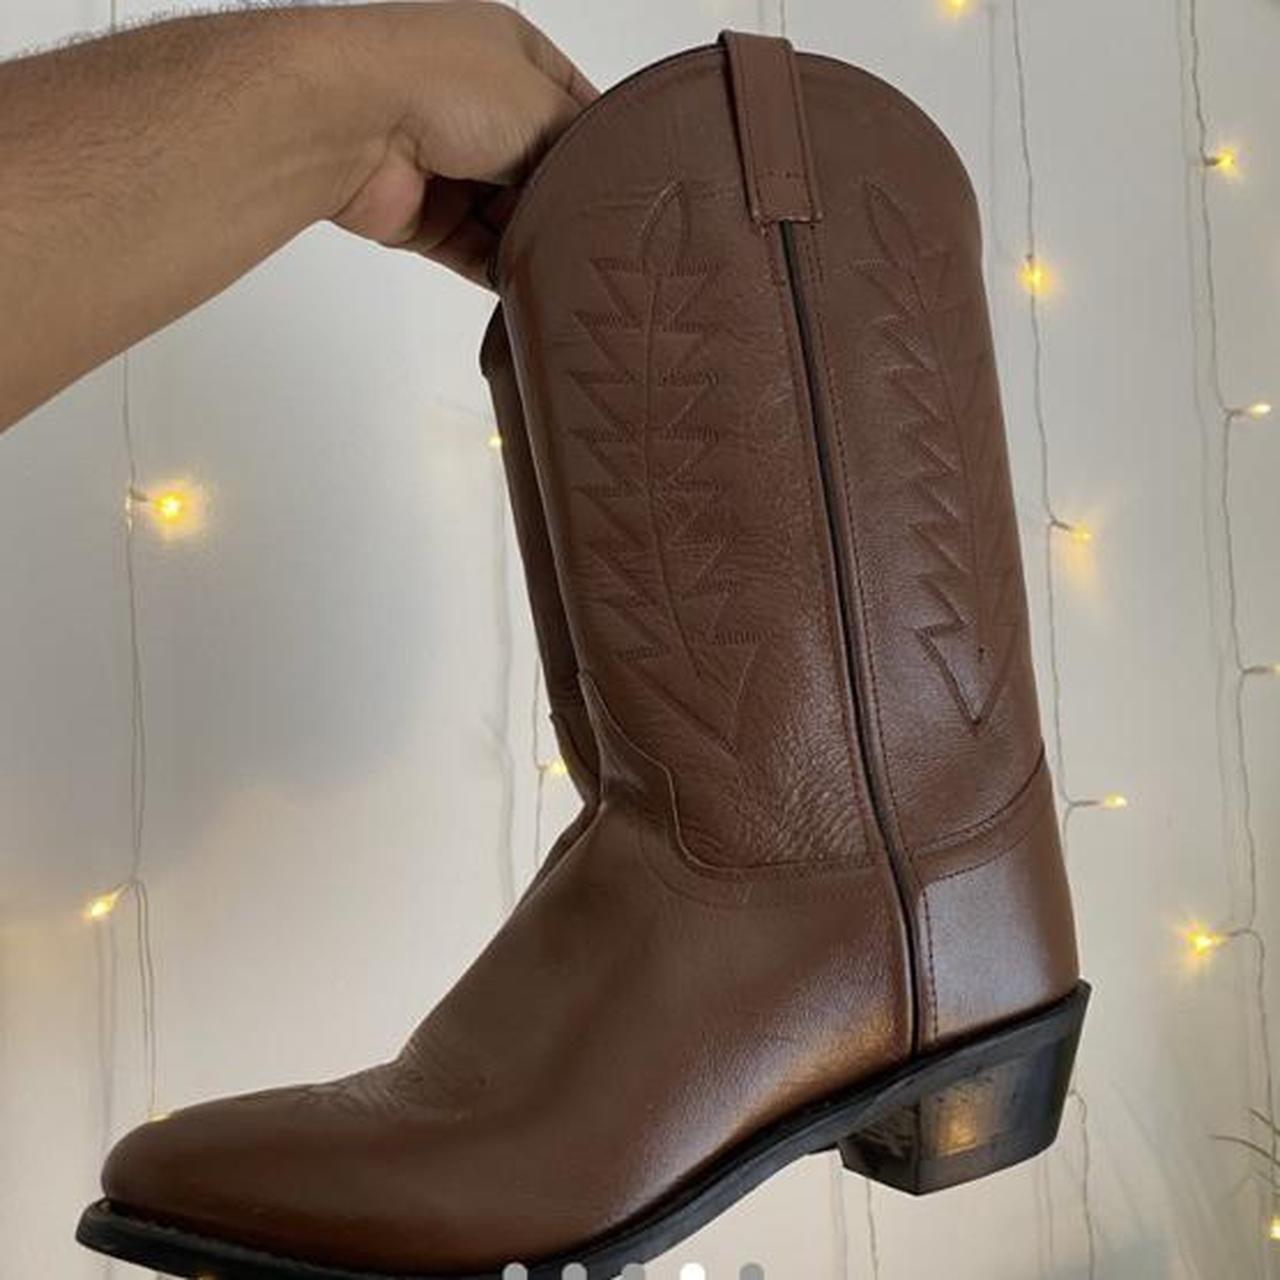 Product Image 2 - Brown vintage cowboy boots

Western cowboy